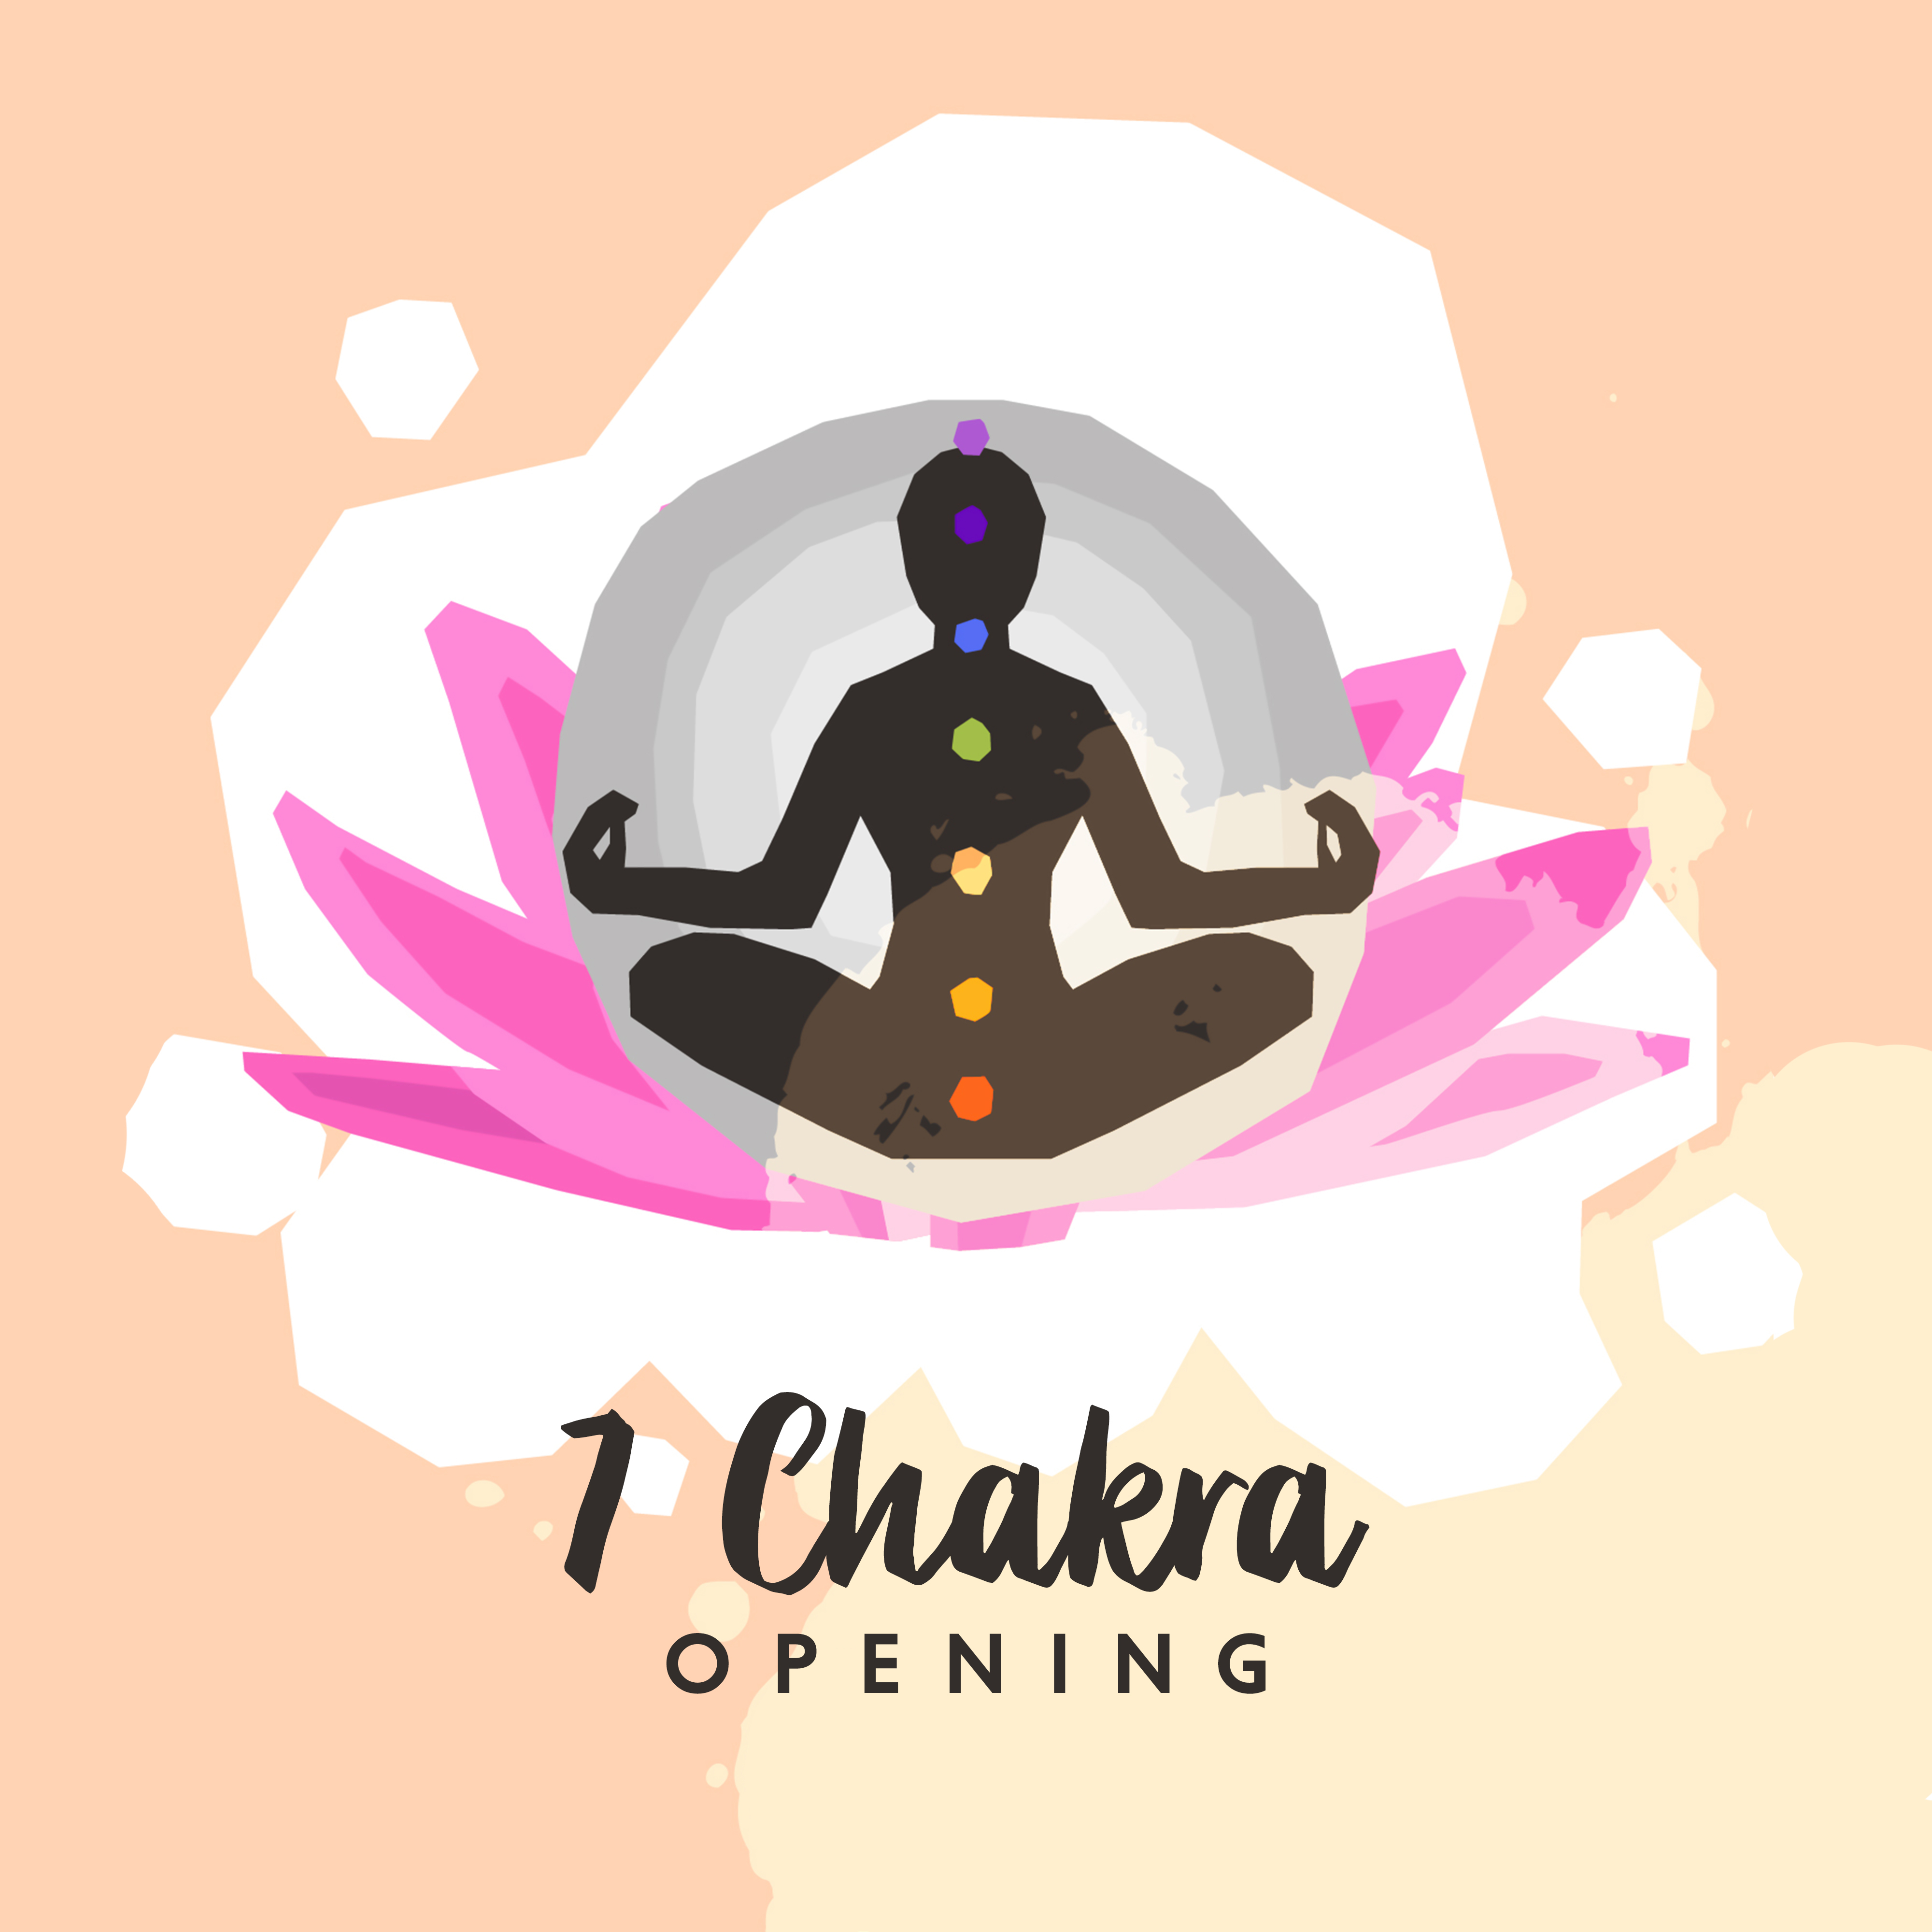 7 Chakra Opening: Music for Meditation, Balancing Meditation, Healing and Opening Waves